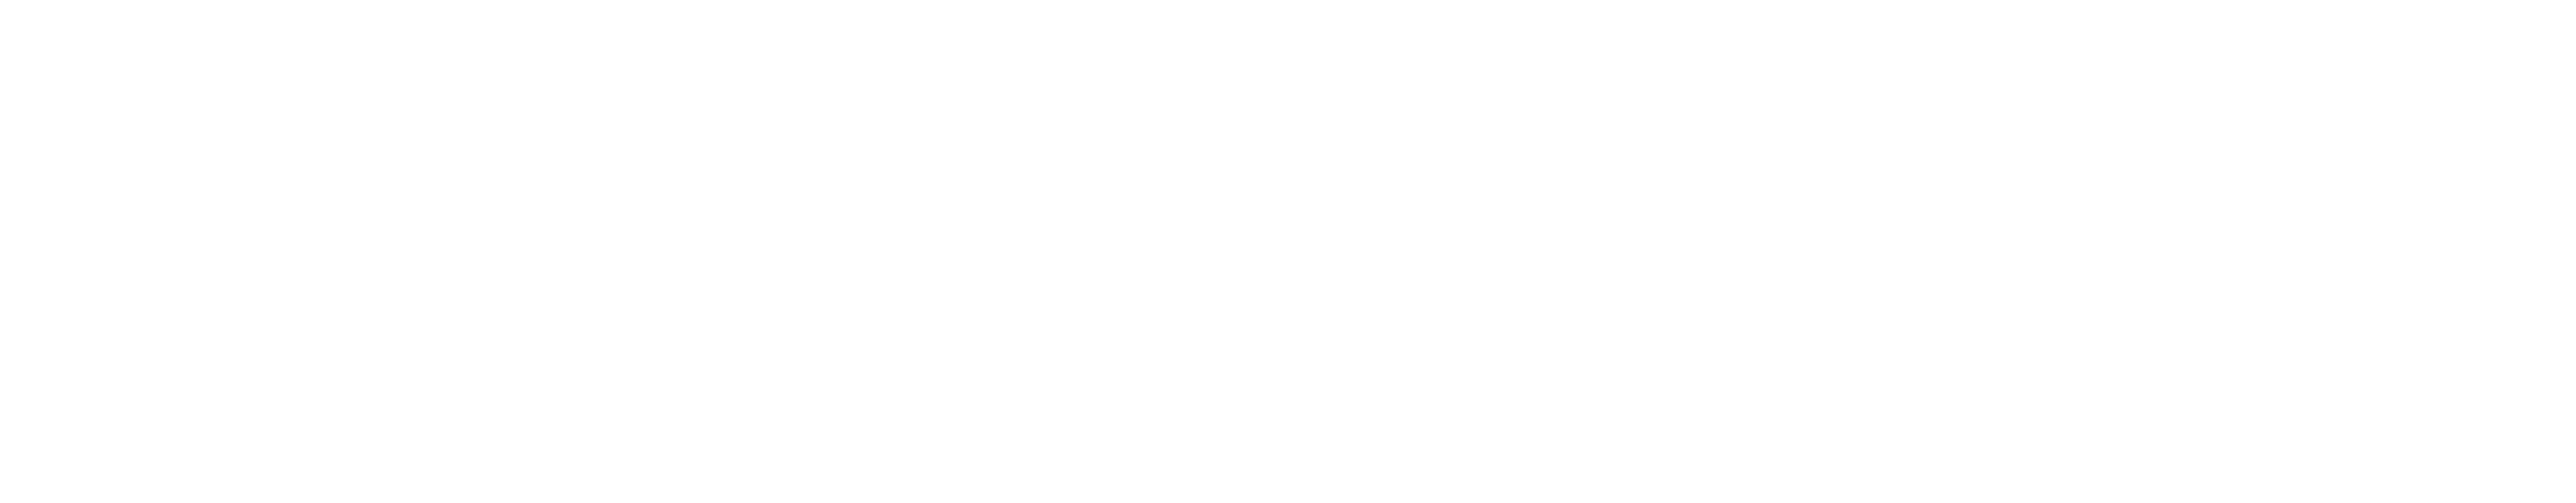 Faculty of bioscience engineering logo